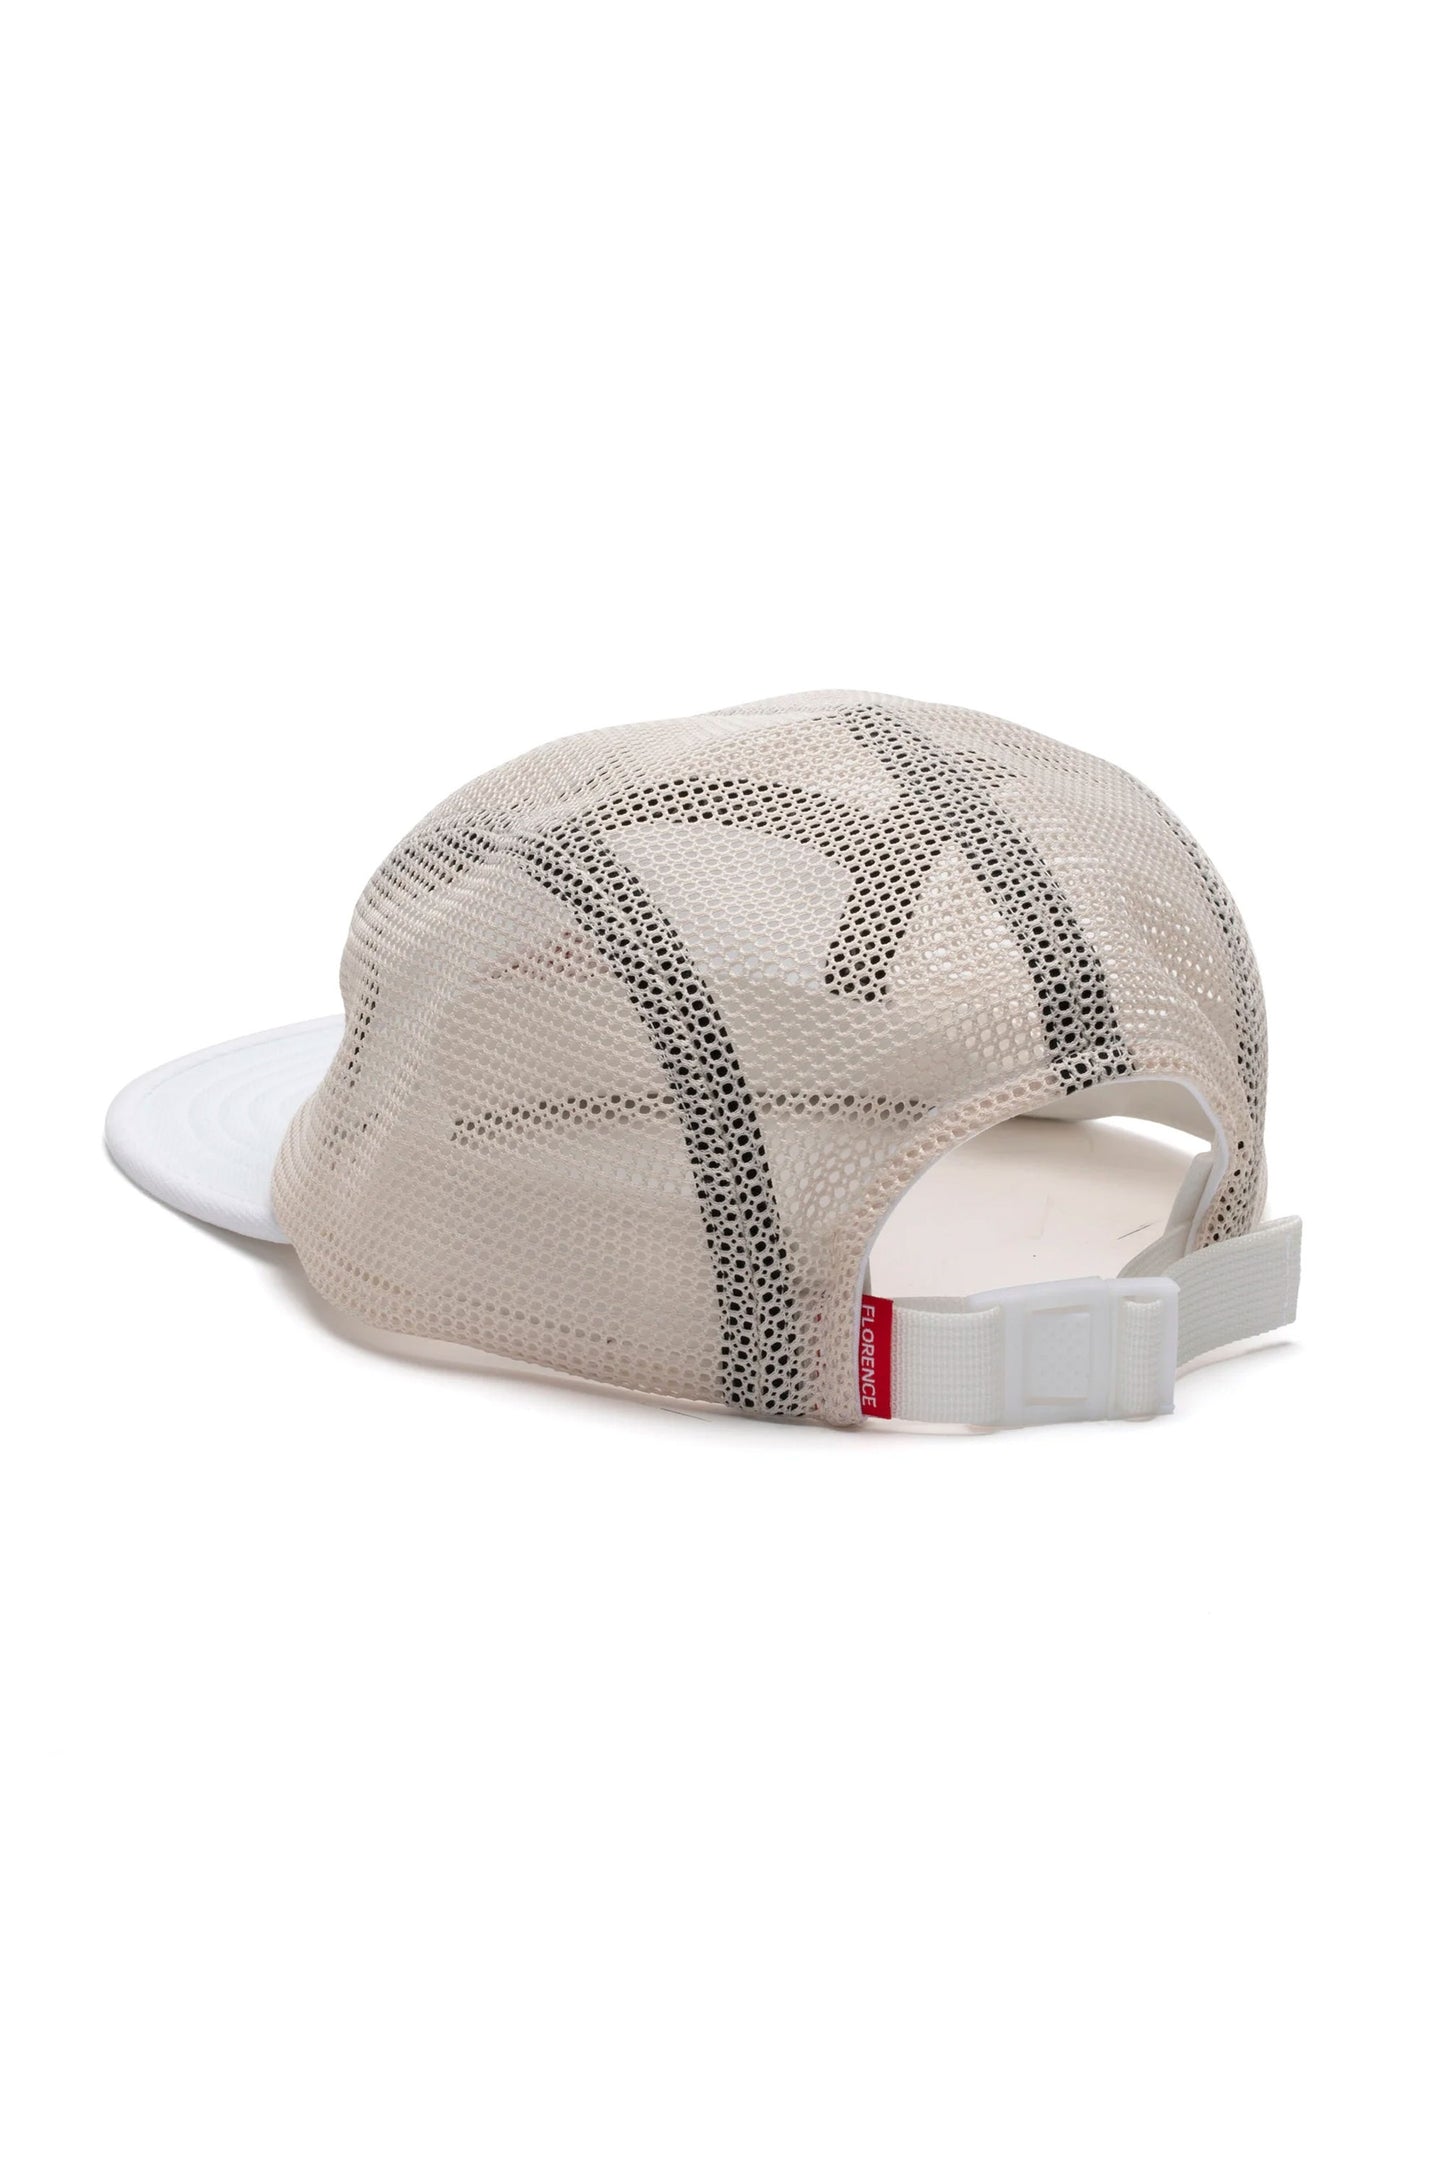 Pukas-Surf-Shop-florence-marine-hat-airtex-unstructured-hat-white